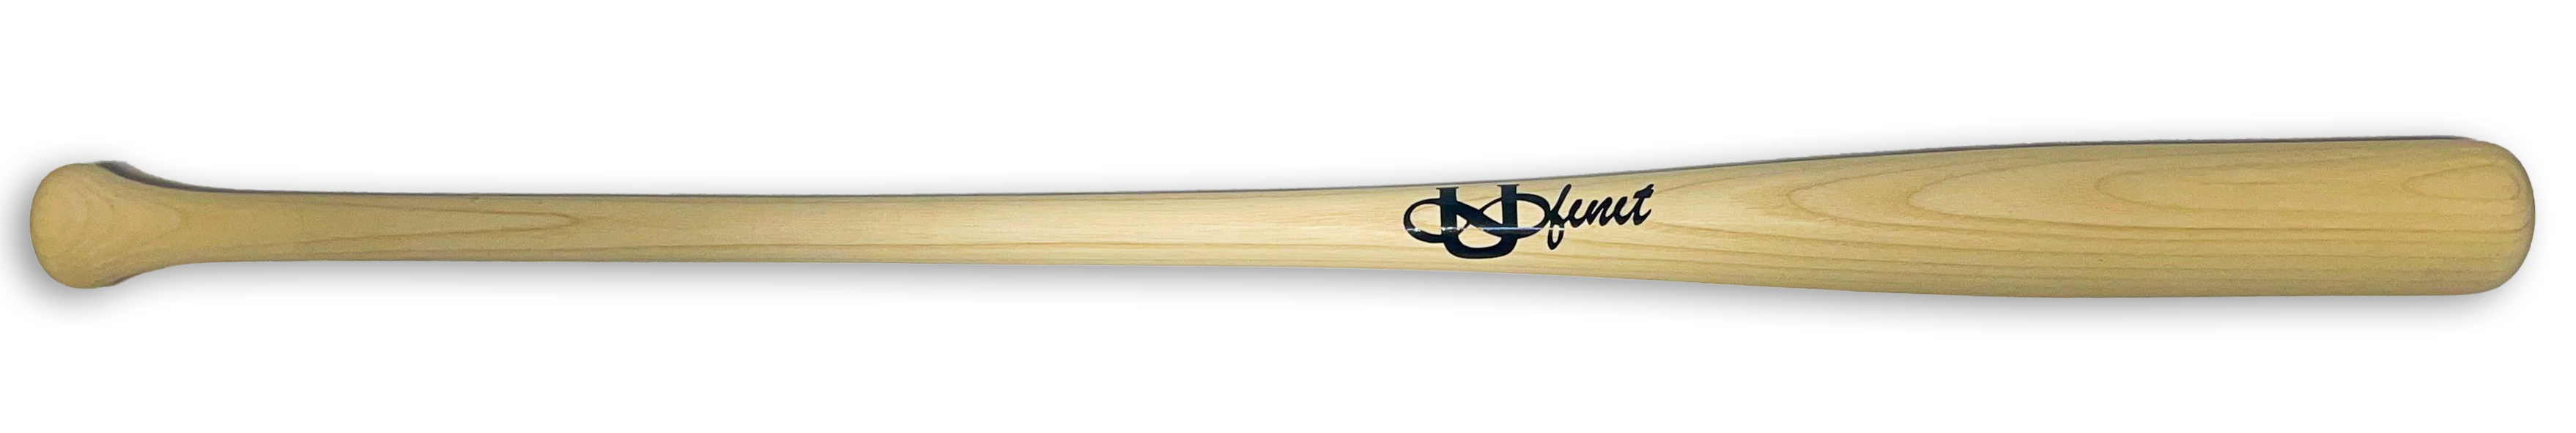 Fungo - Custom Wood Baseball Bats | Ufinit®